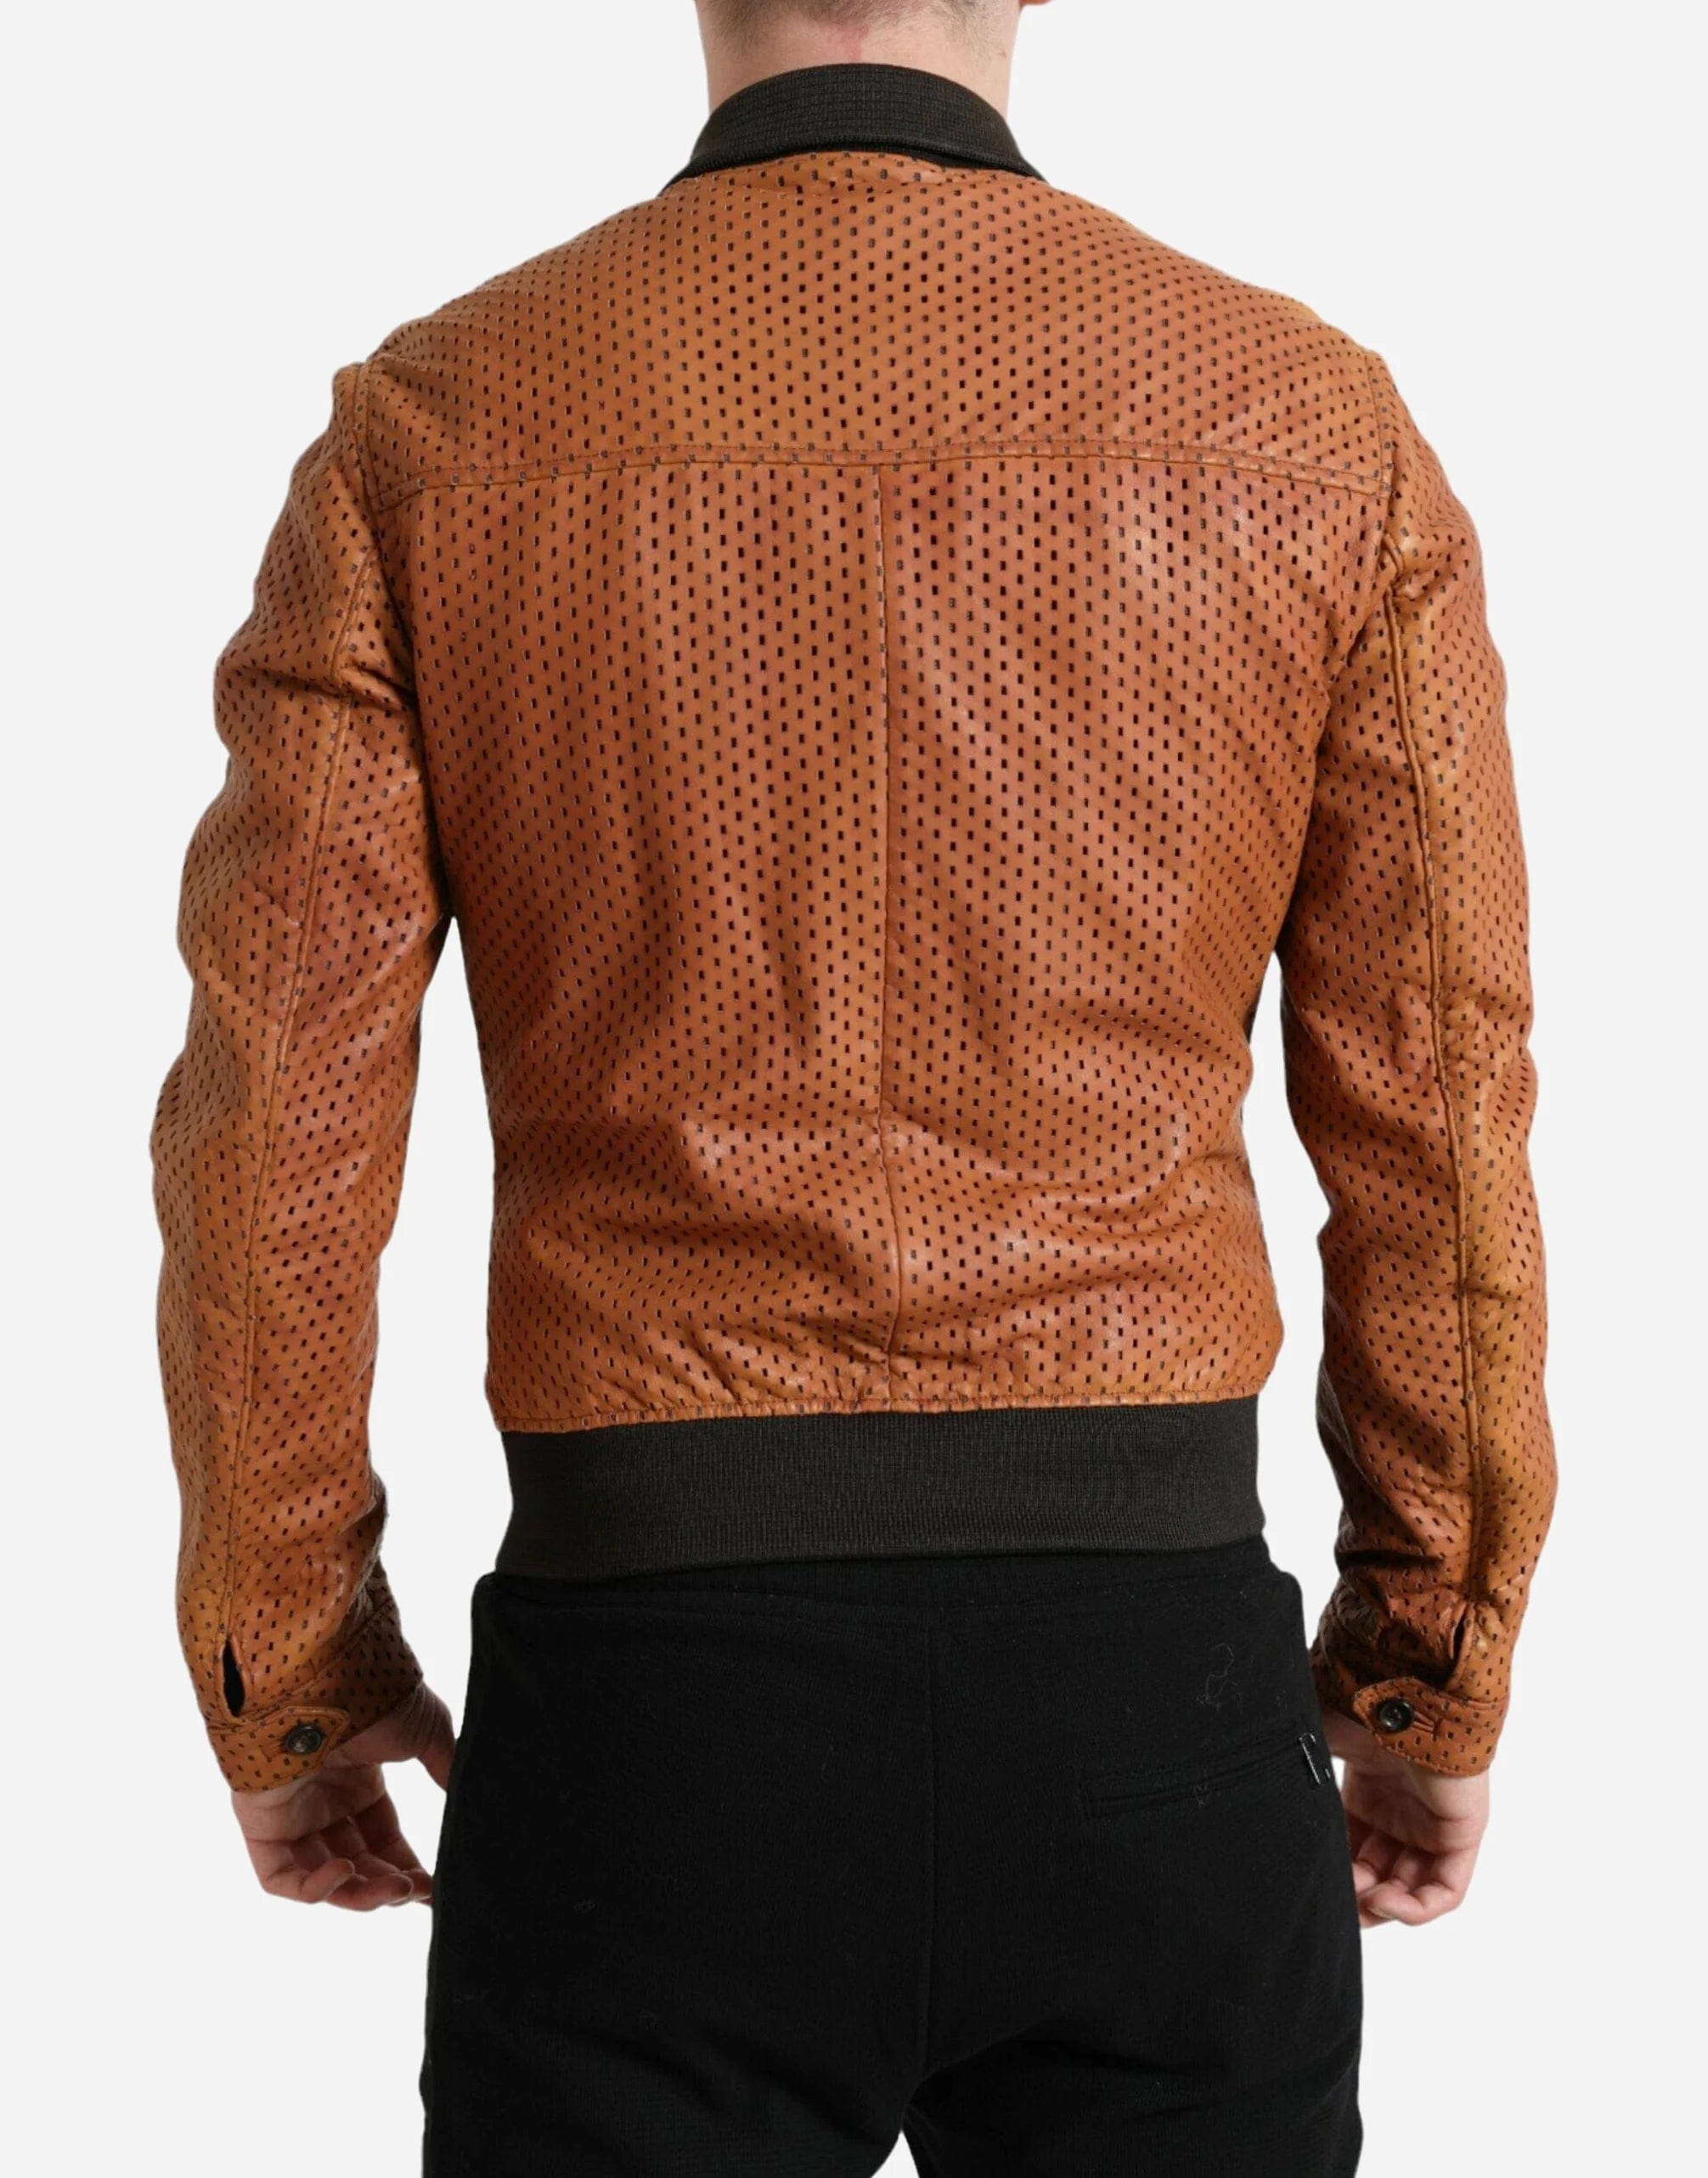 Dolce & Gabbana Perforated Leather Bomber Jacket